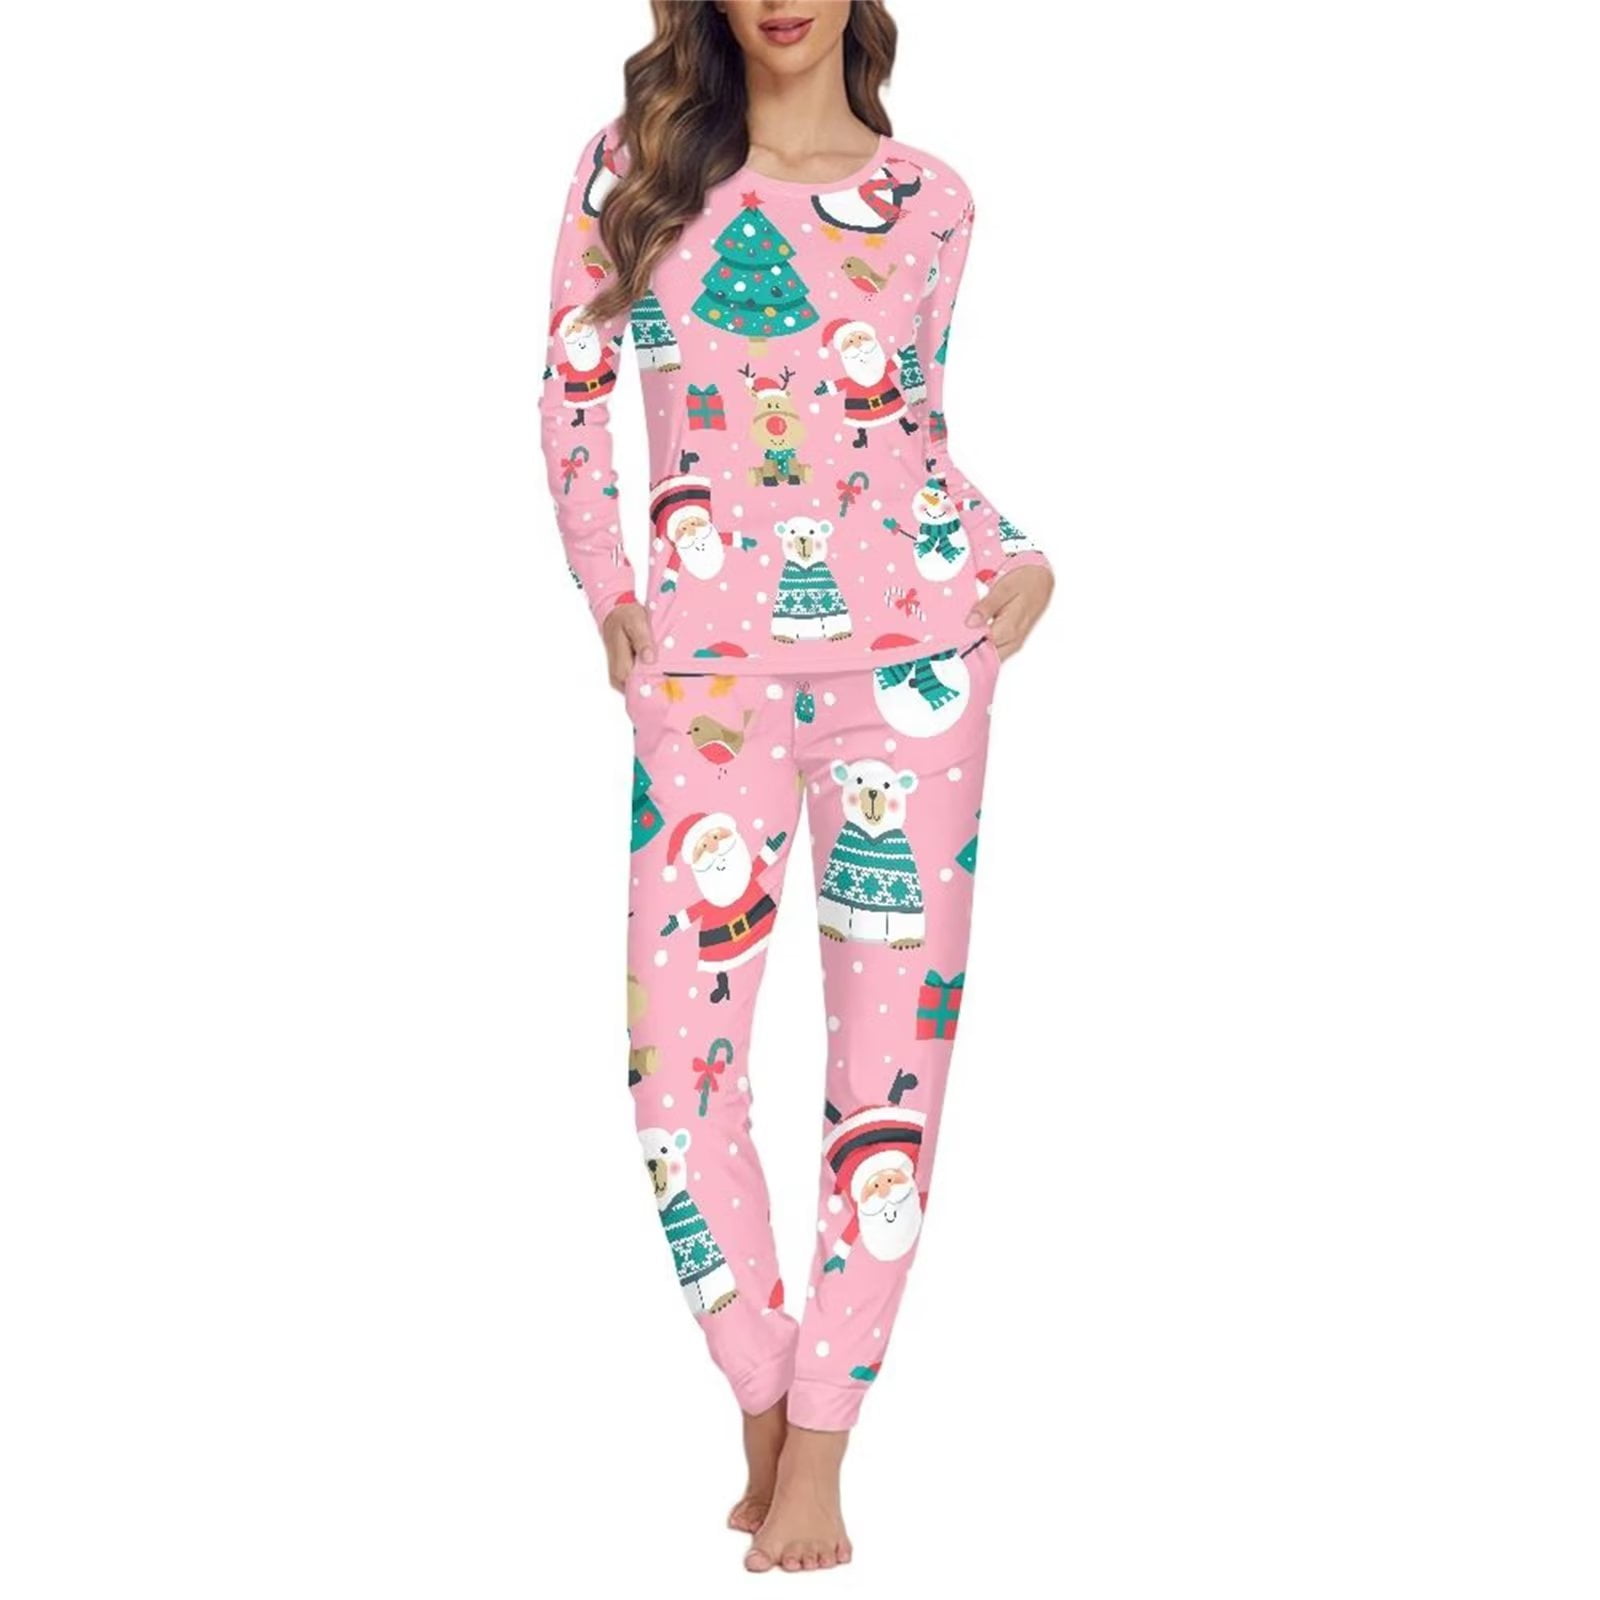 Binienty Pink Santa Claus Snowman Pajamas for Women Set Long Pants